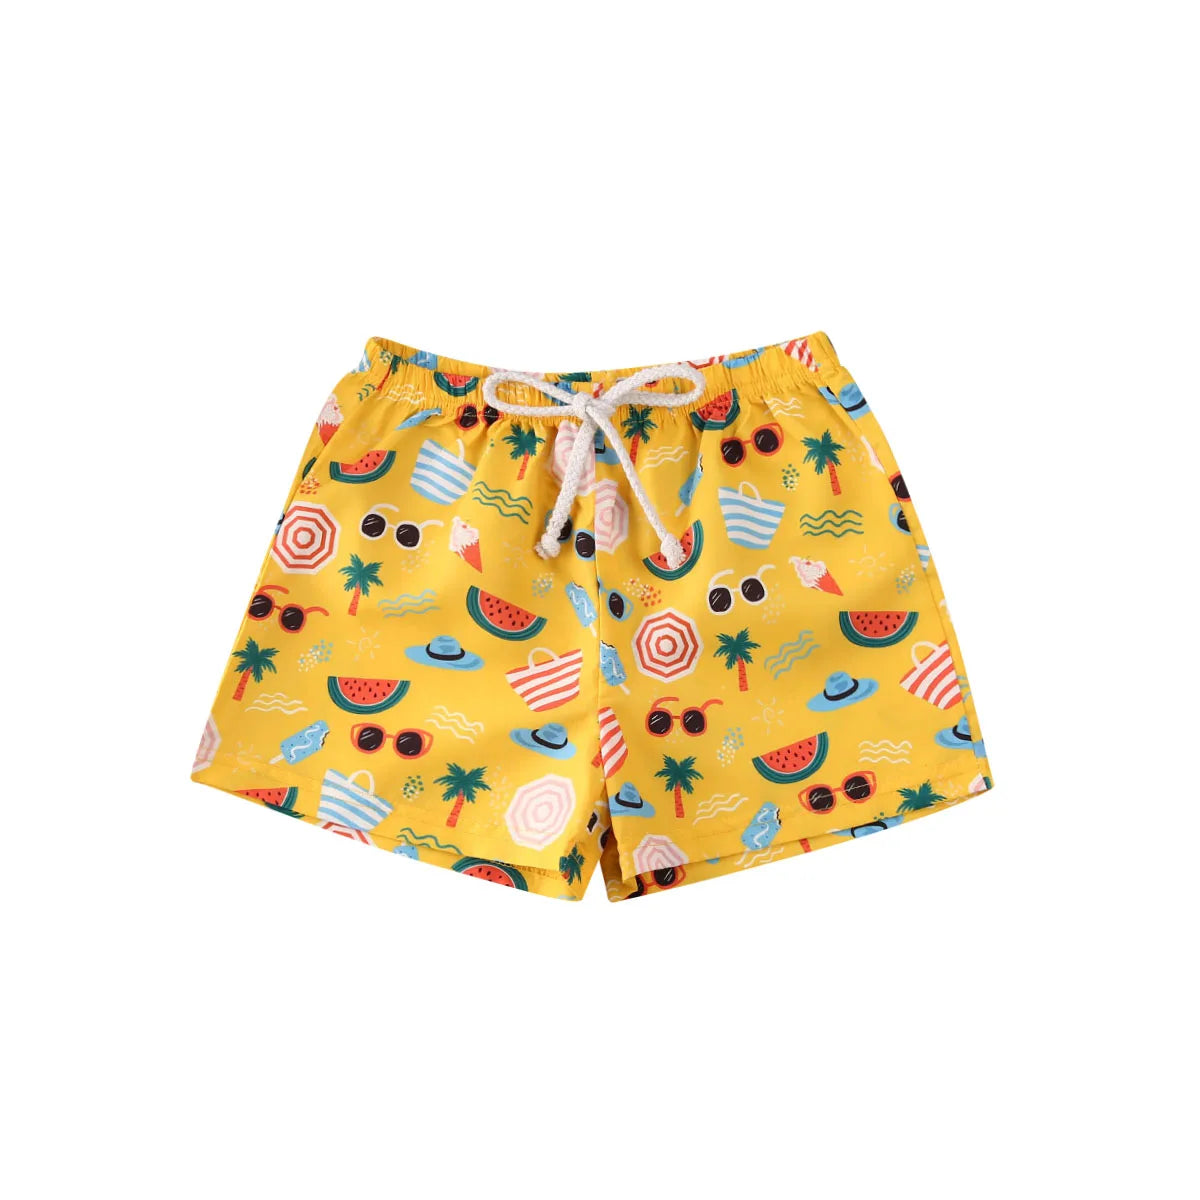 "Ocean Adventurer" Toddler Boys Beach Swimwear Shorts | Cartoon Printed Swimming Trunks | Summer Swim Wear for Baby & Kids ShopOnlyDeal